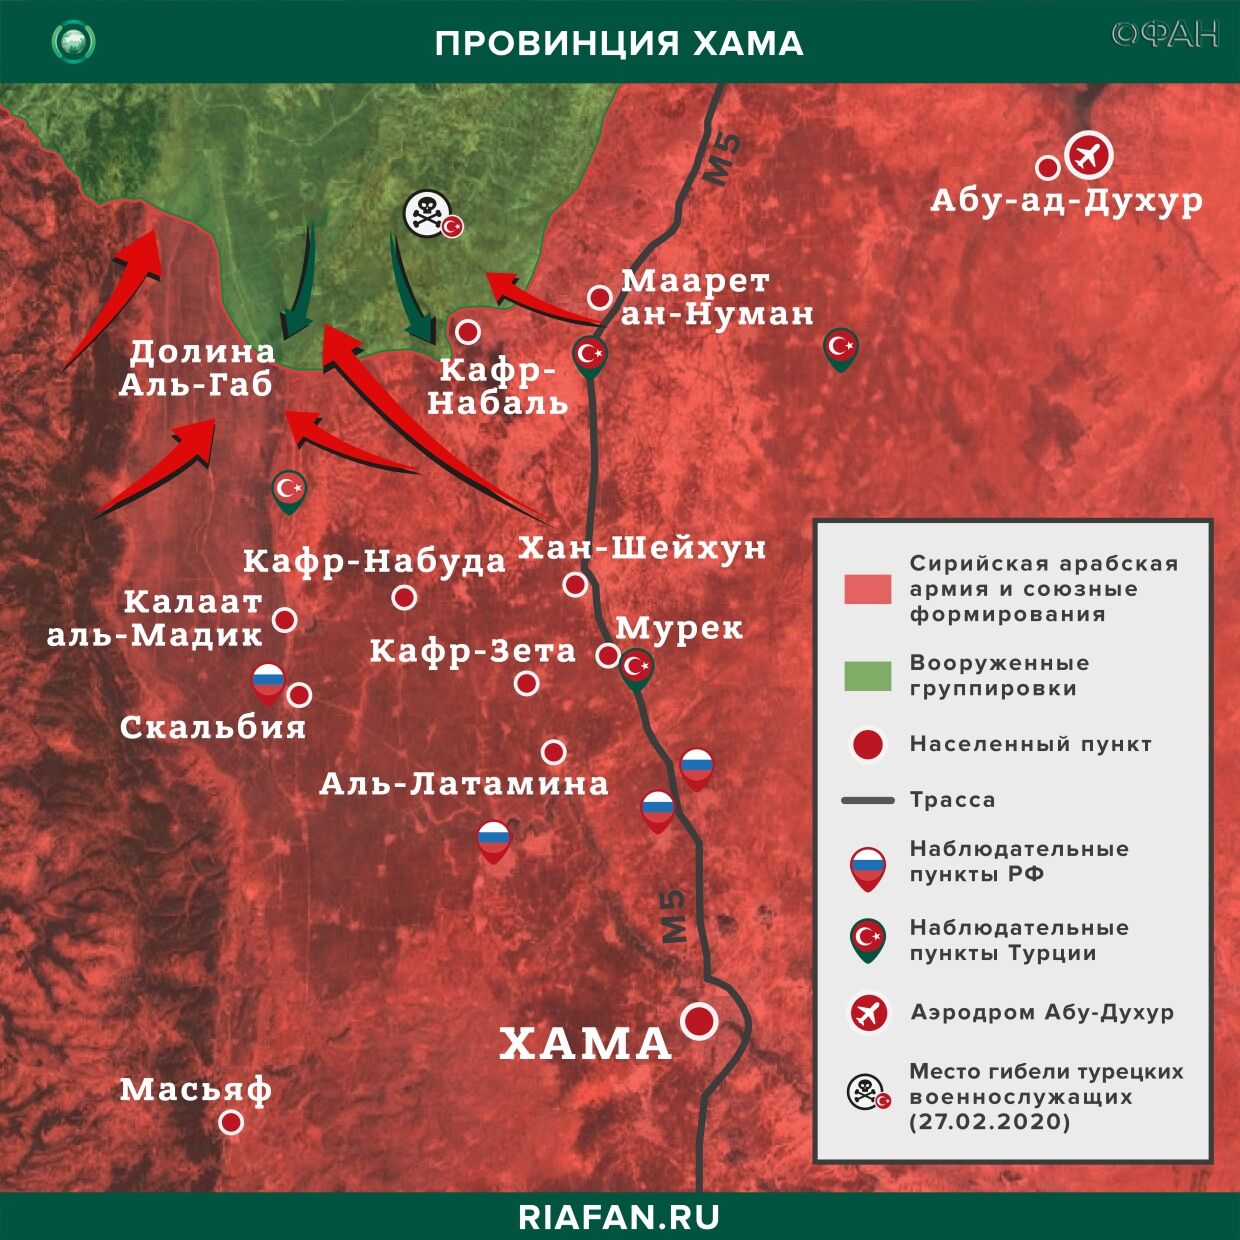 Syria news 31 Martha 22.30: Israel's attack in Homs, Adventure again broke the silence mode in Idlib